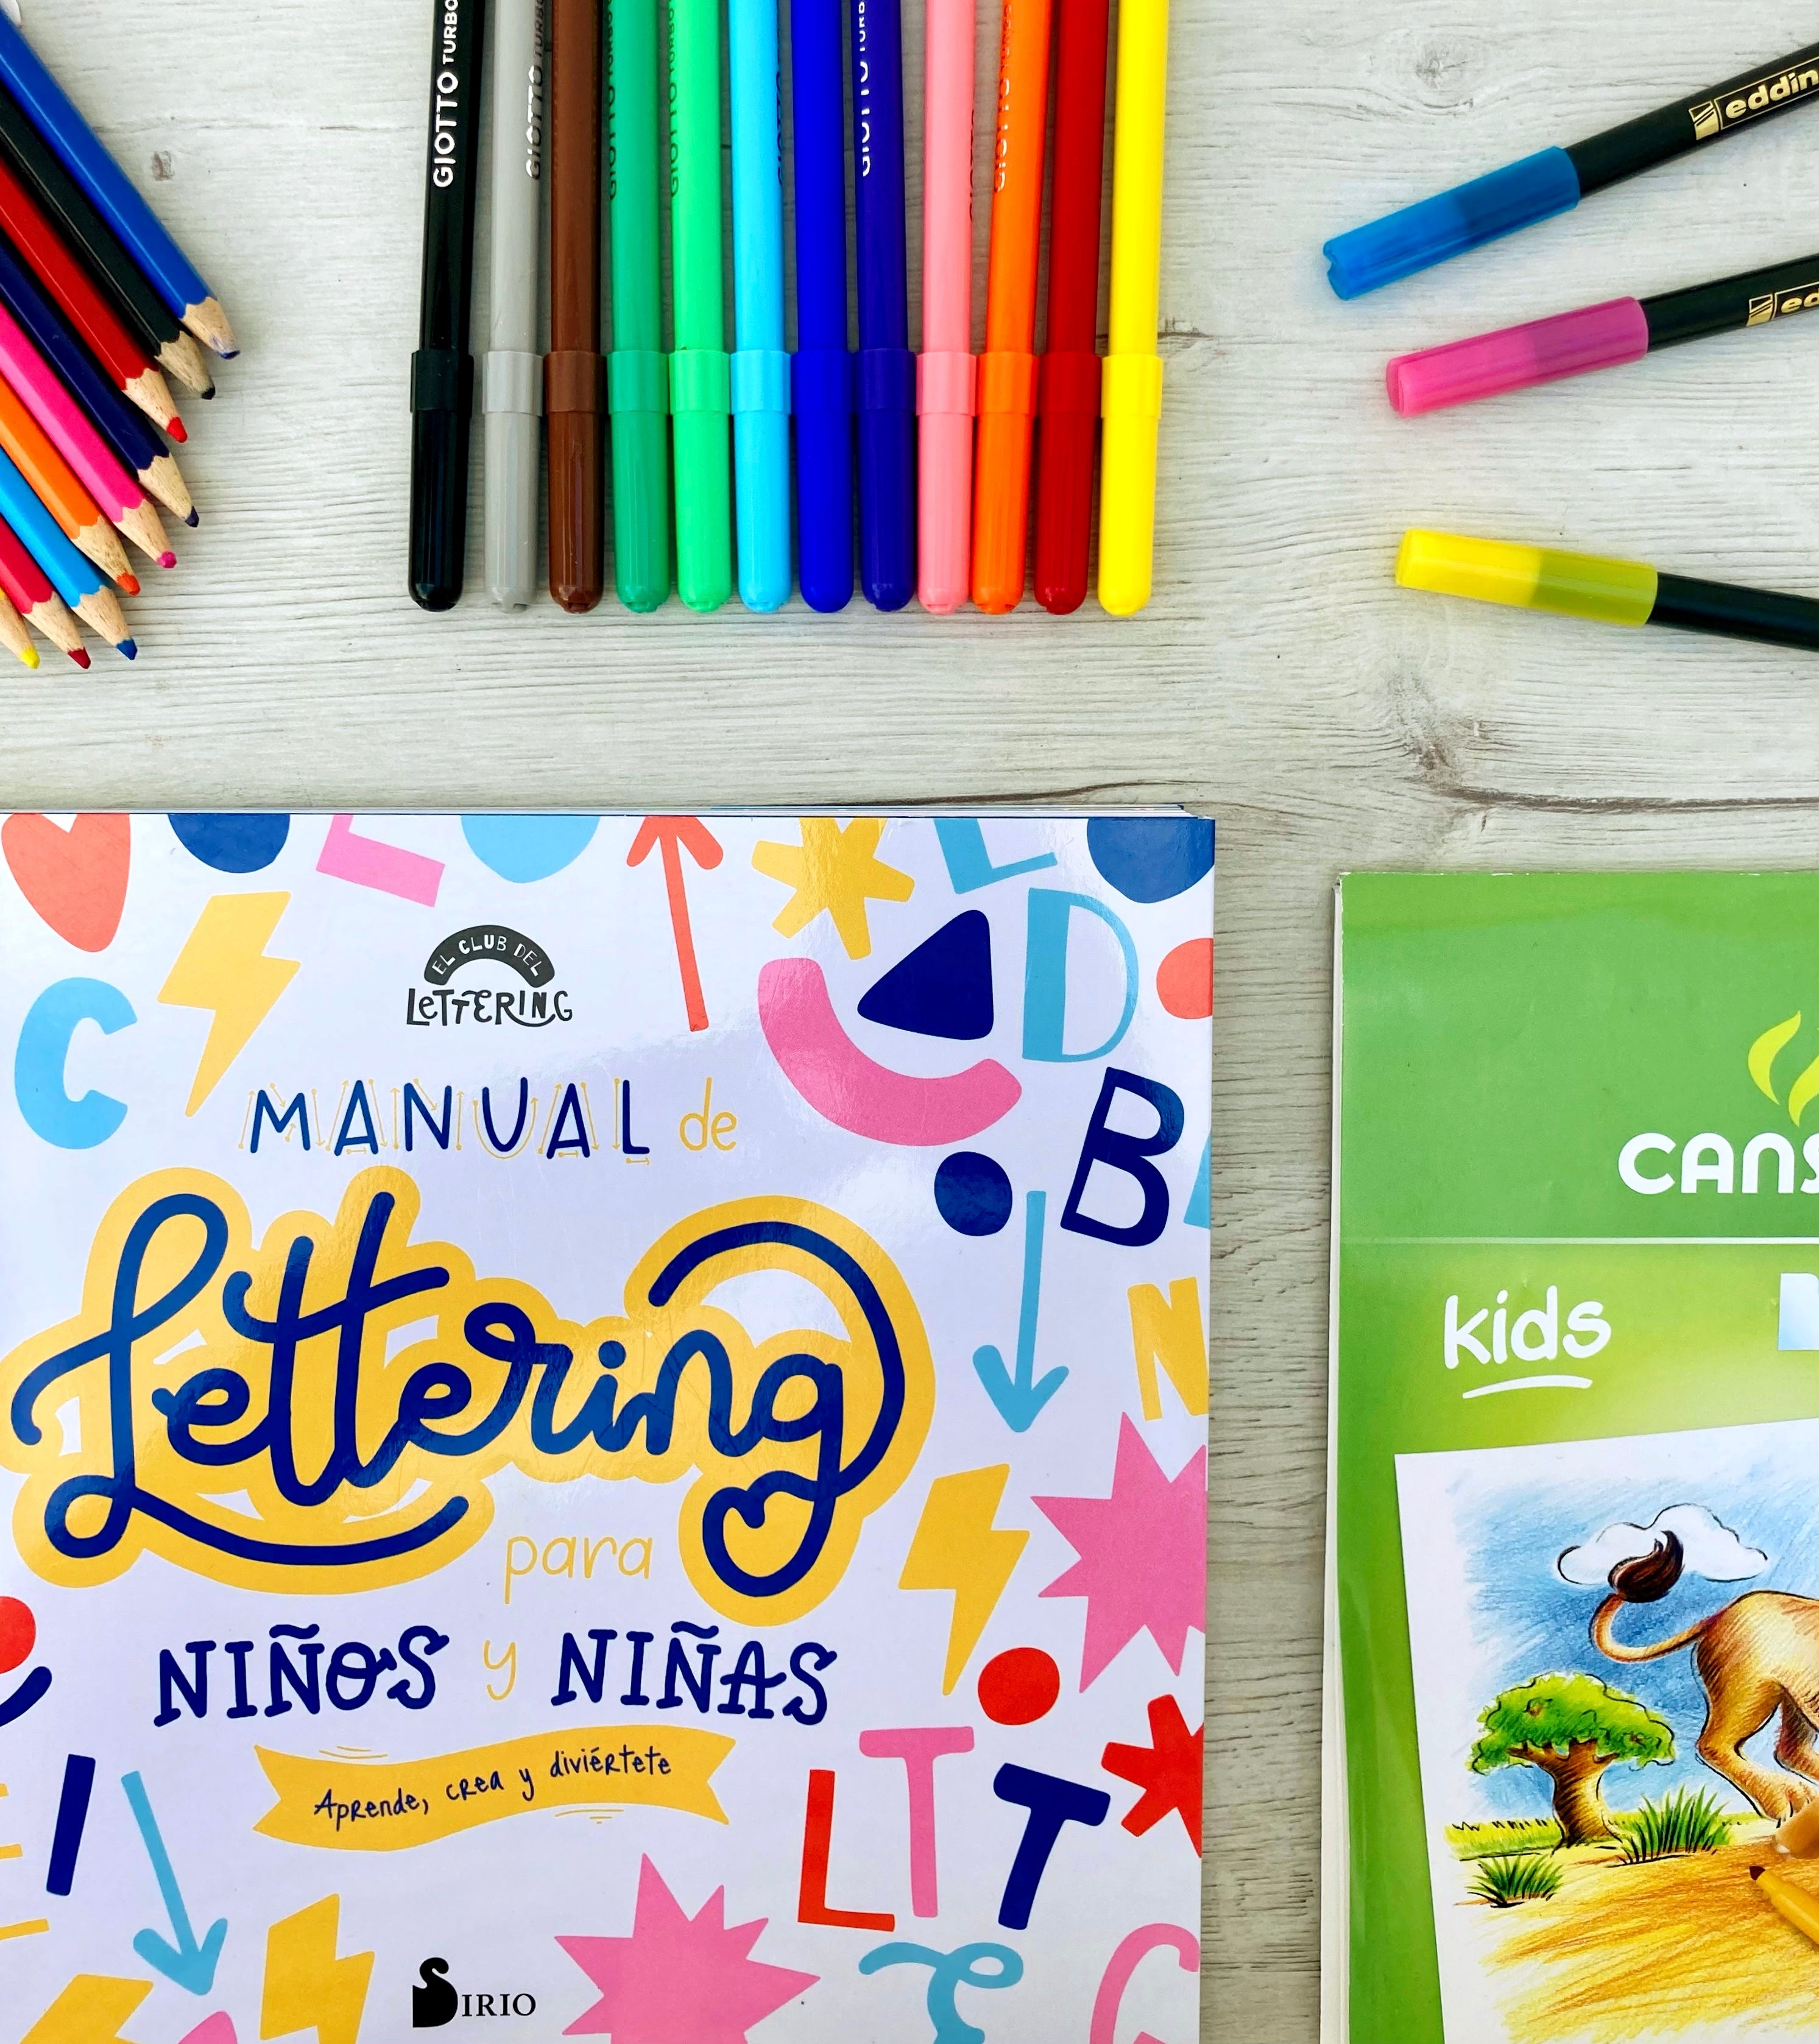 Kit de Lettering para niños